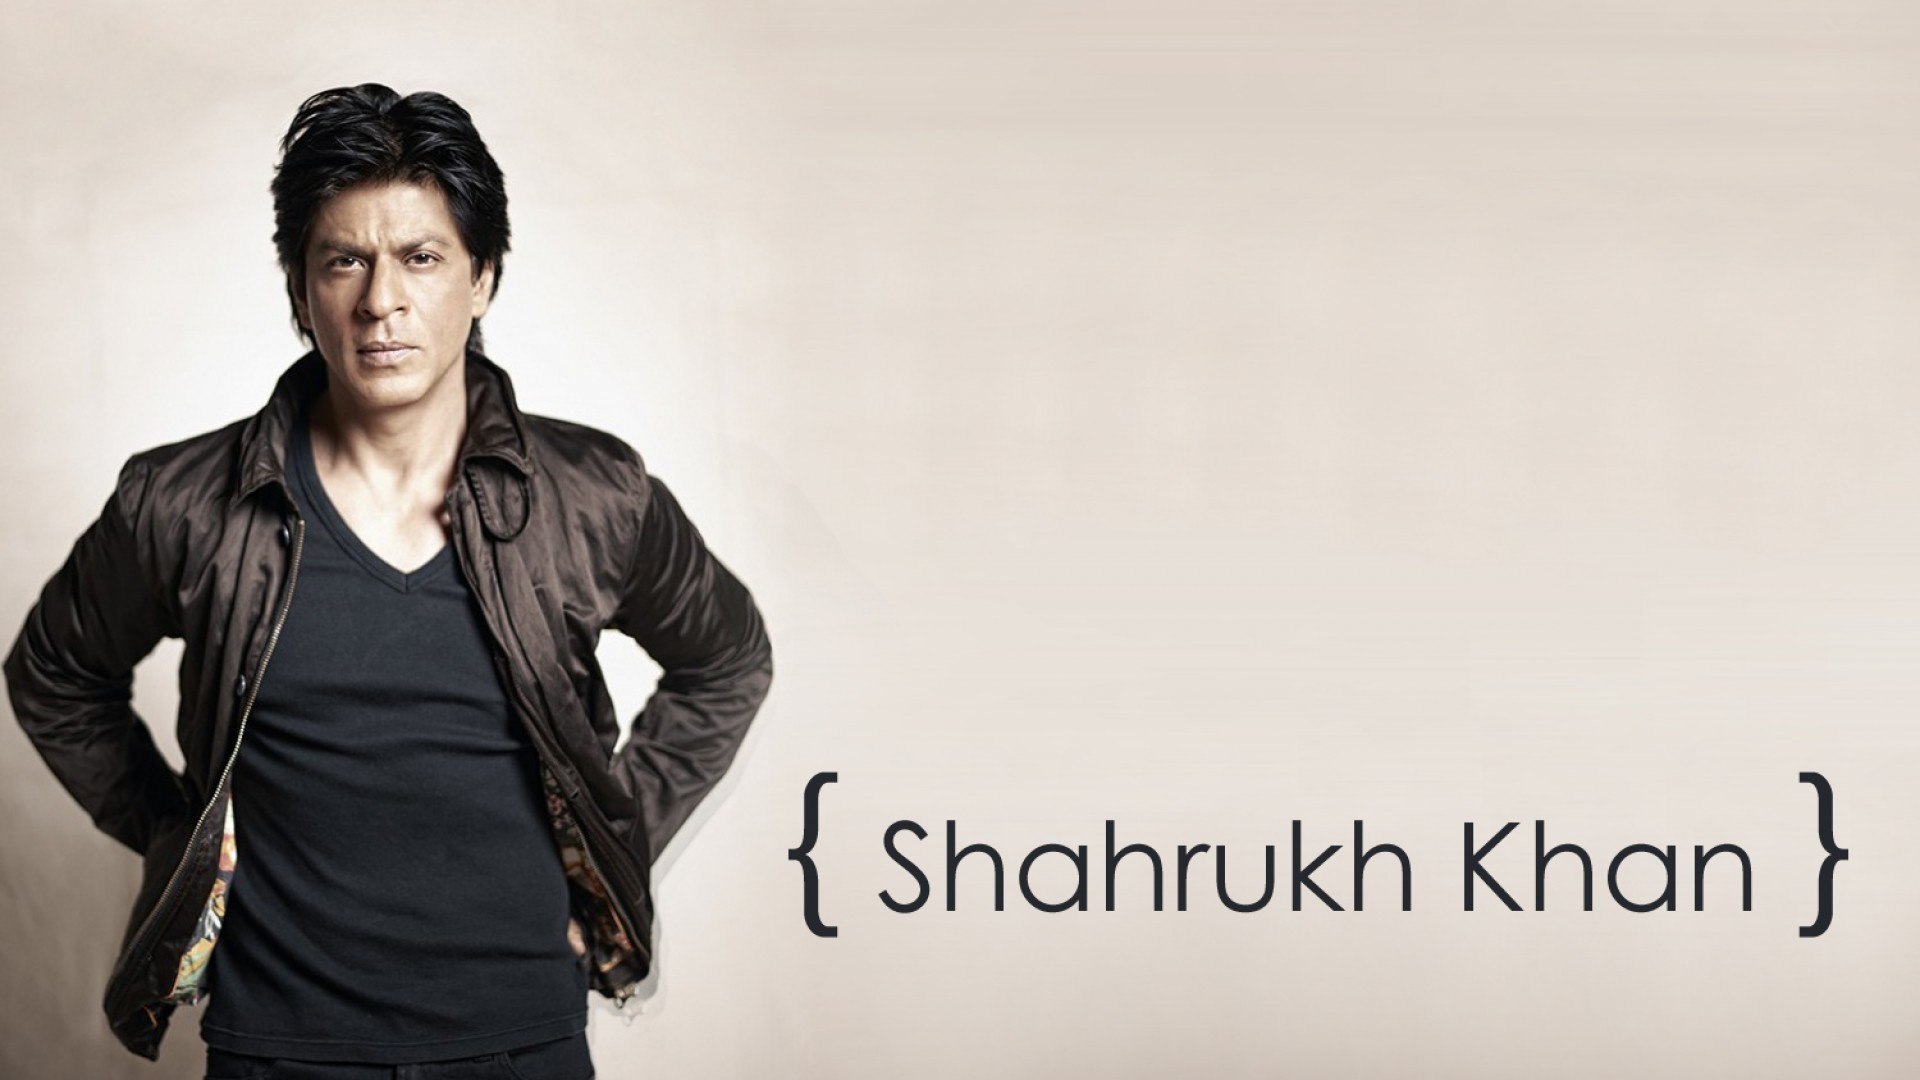 Shah Rukh Khan Hd Desktop